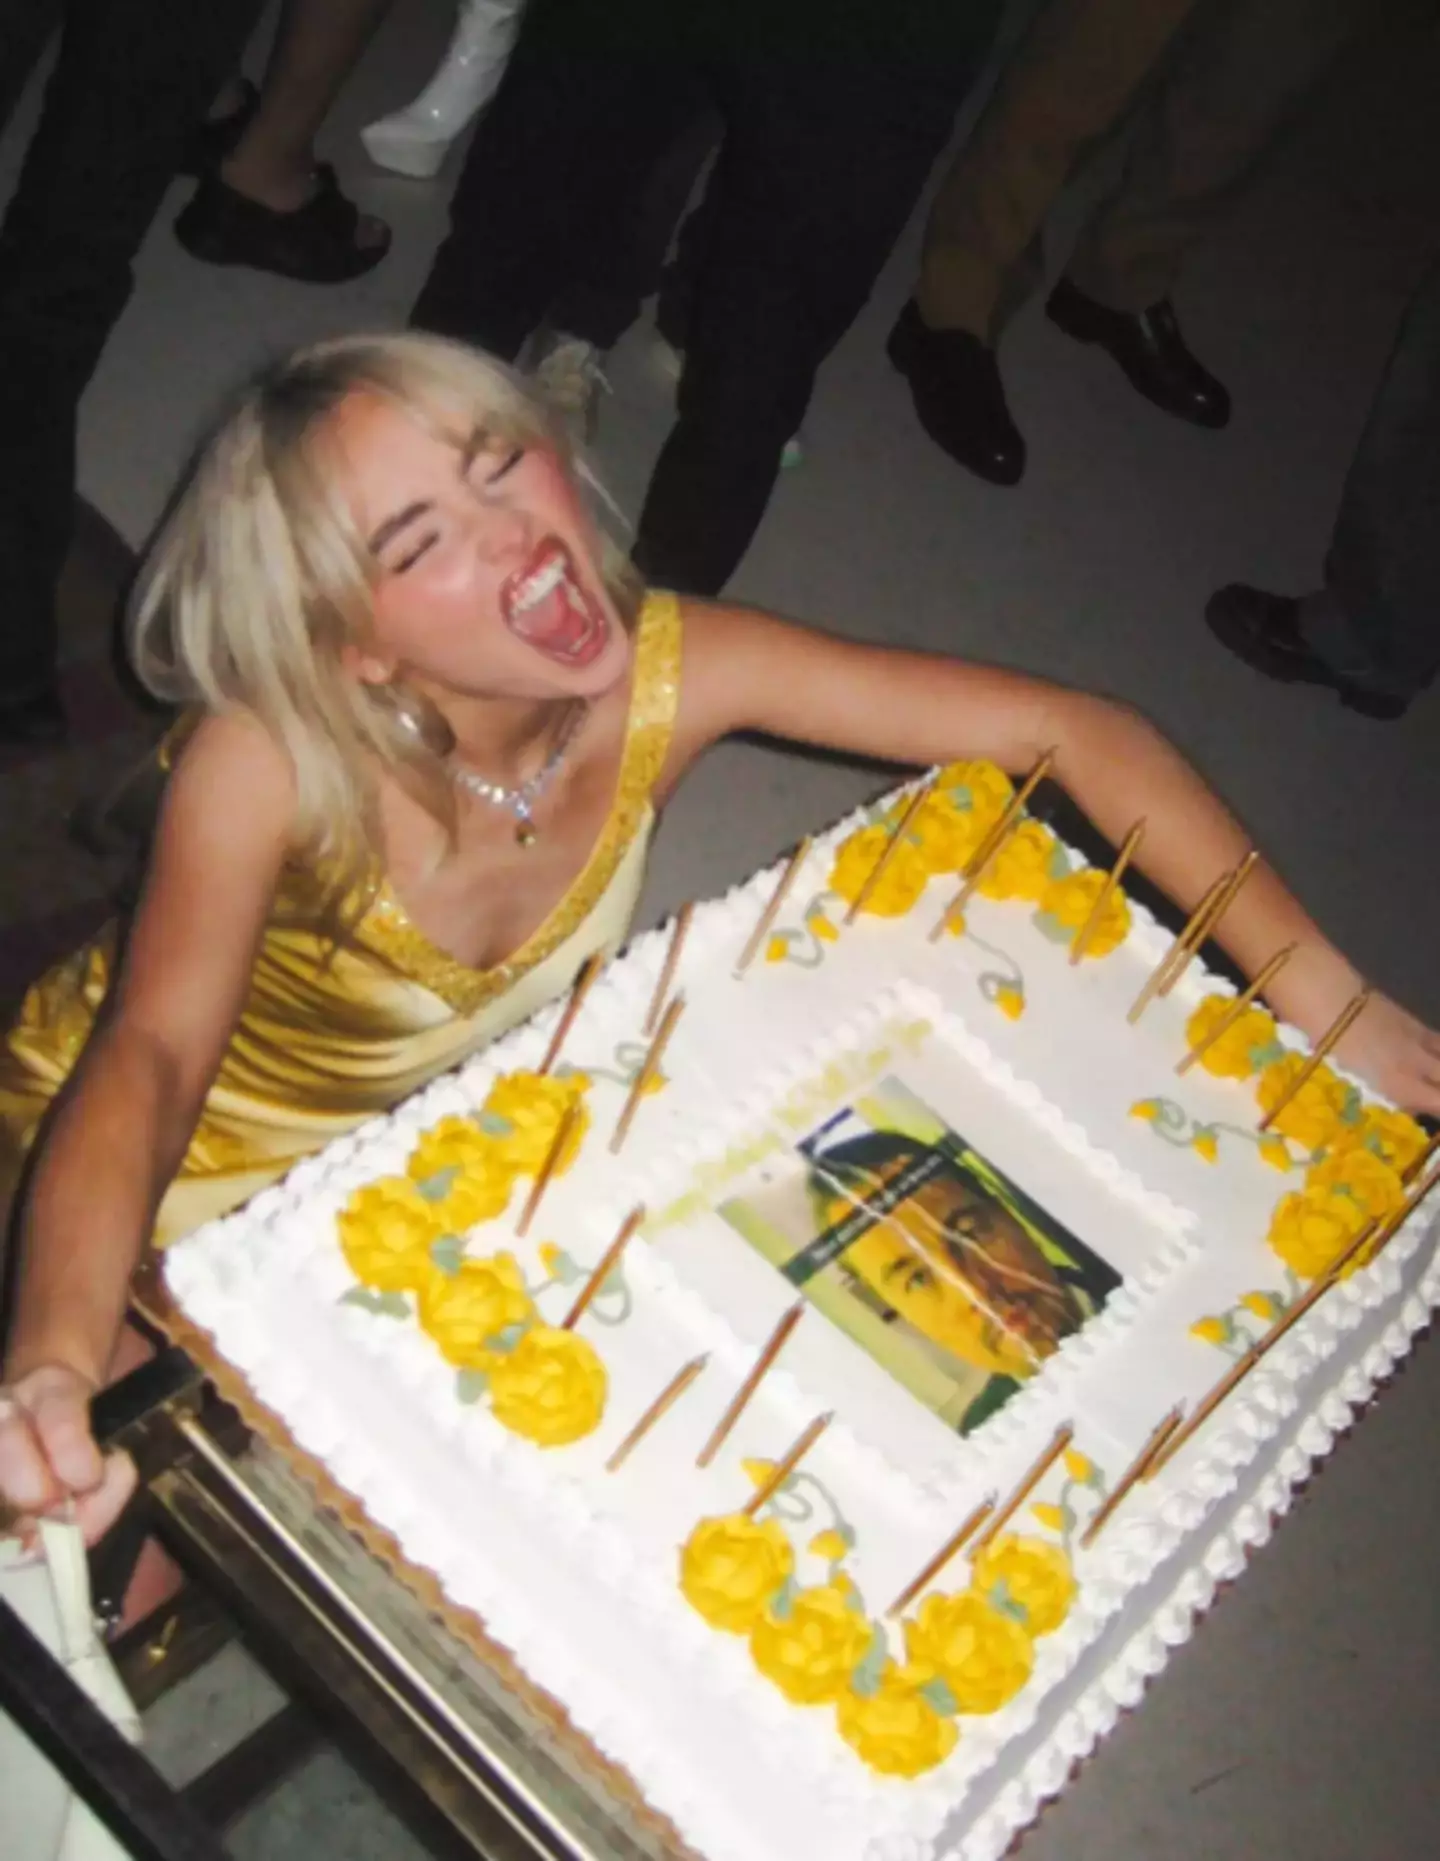 The cake won Carpenter praise from her fans (Instagram / sabrinacarpenter)